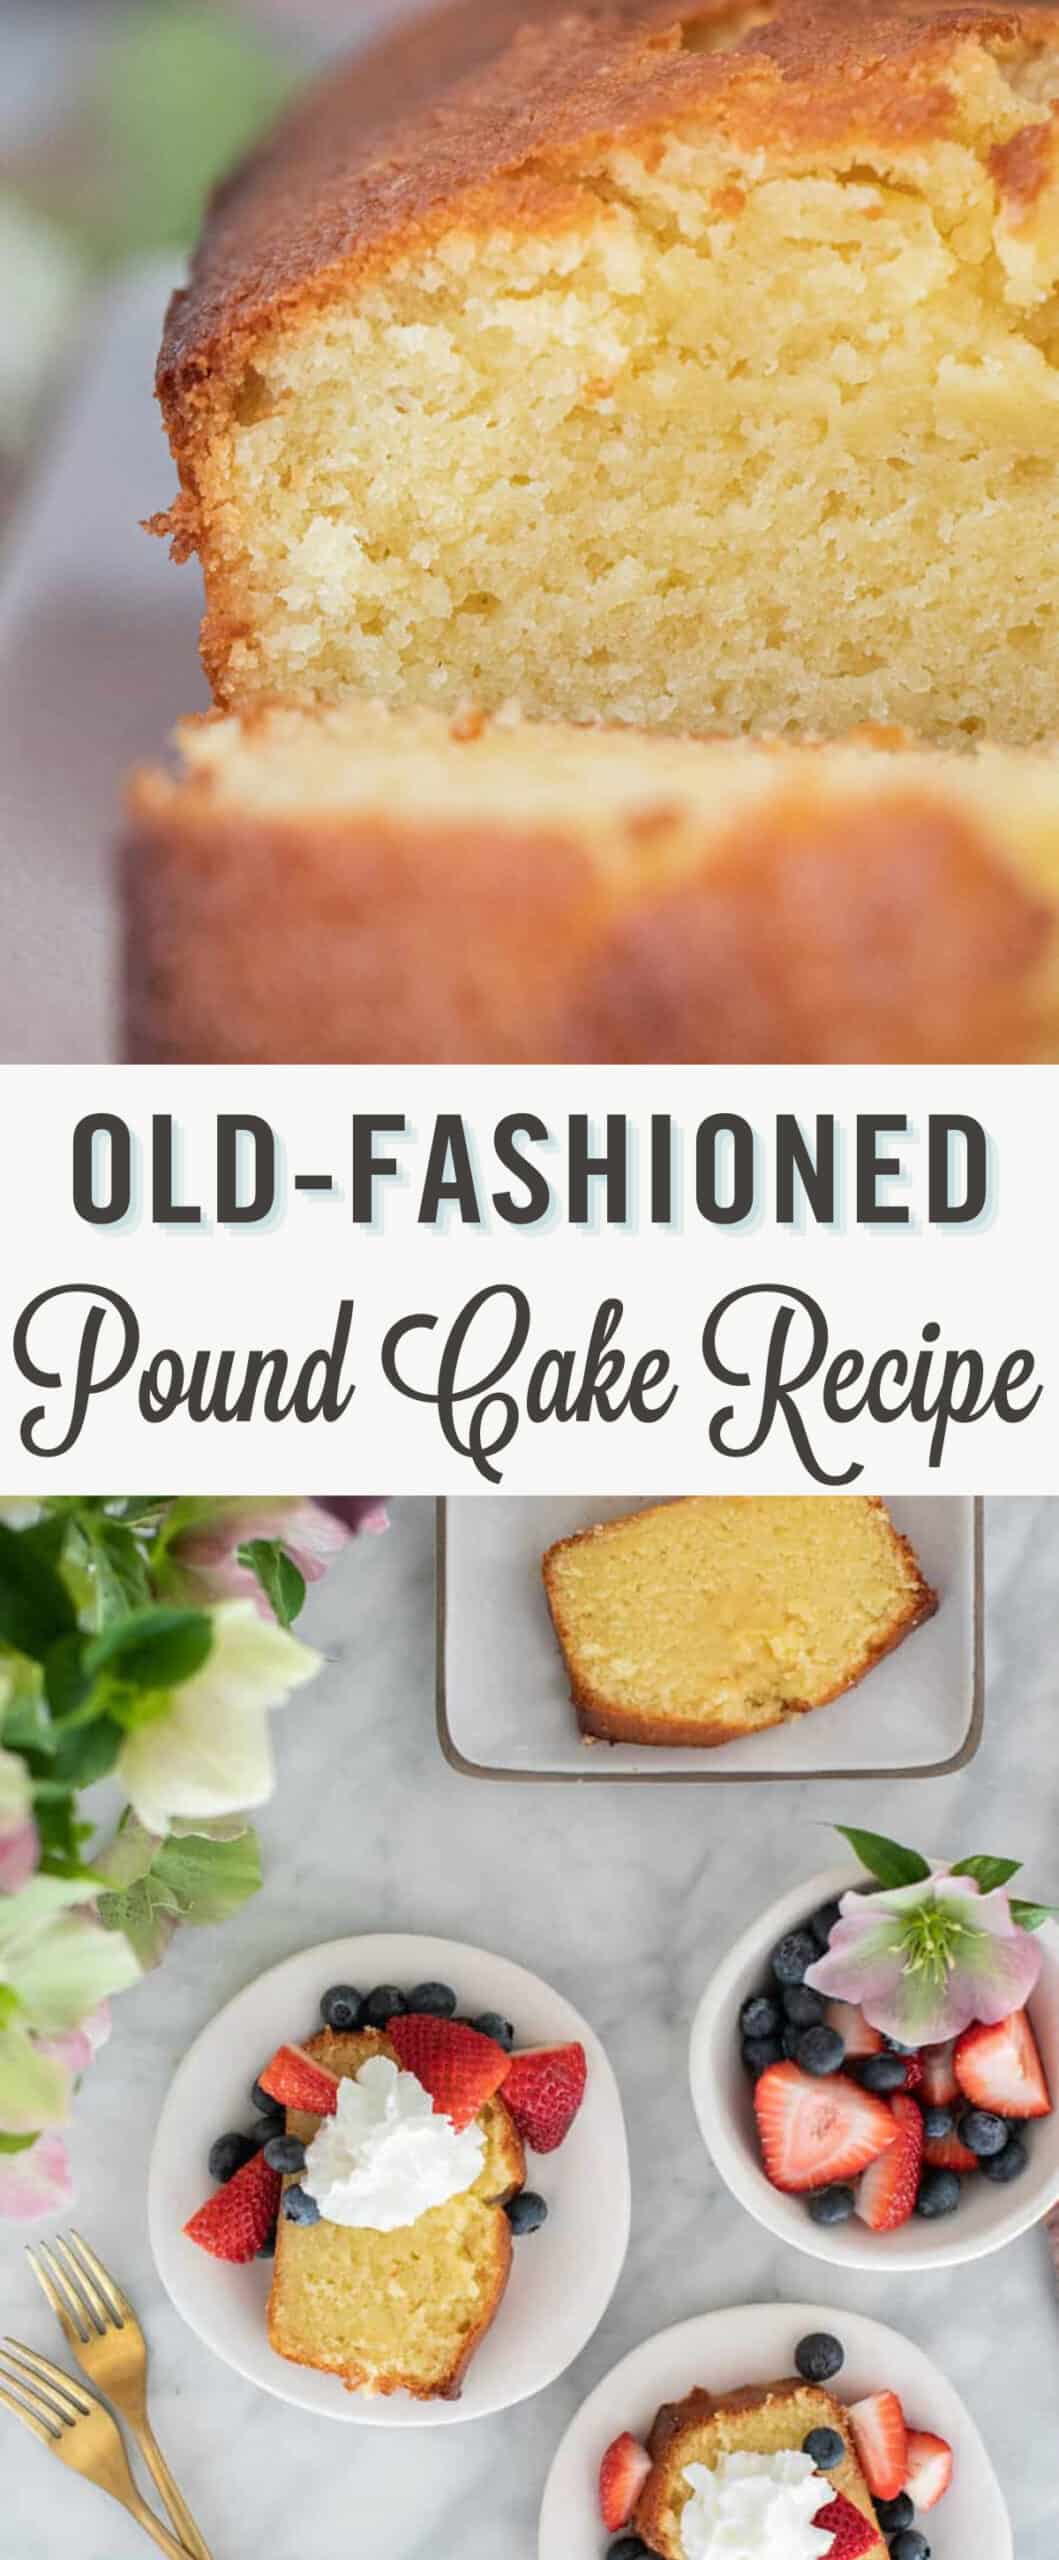 Old-fashioned pound cake recipe.